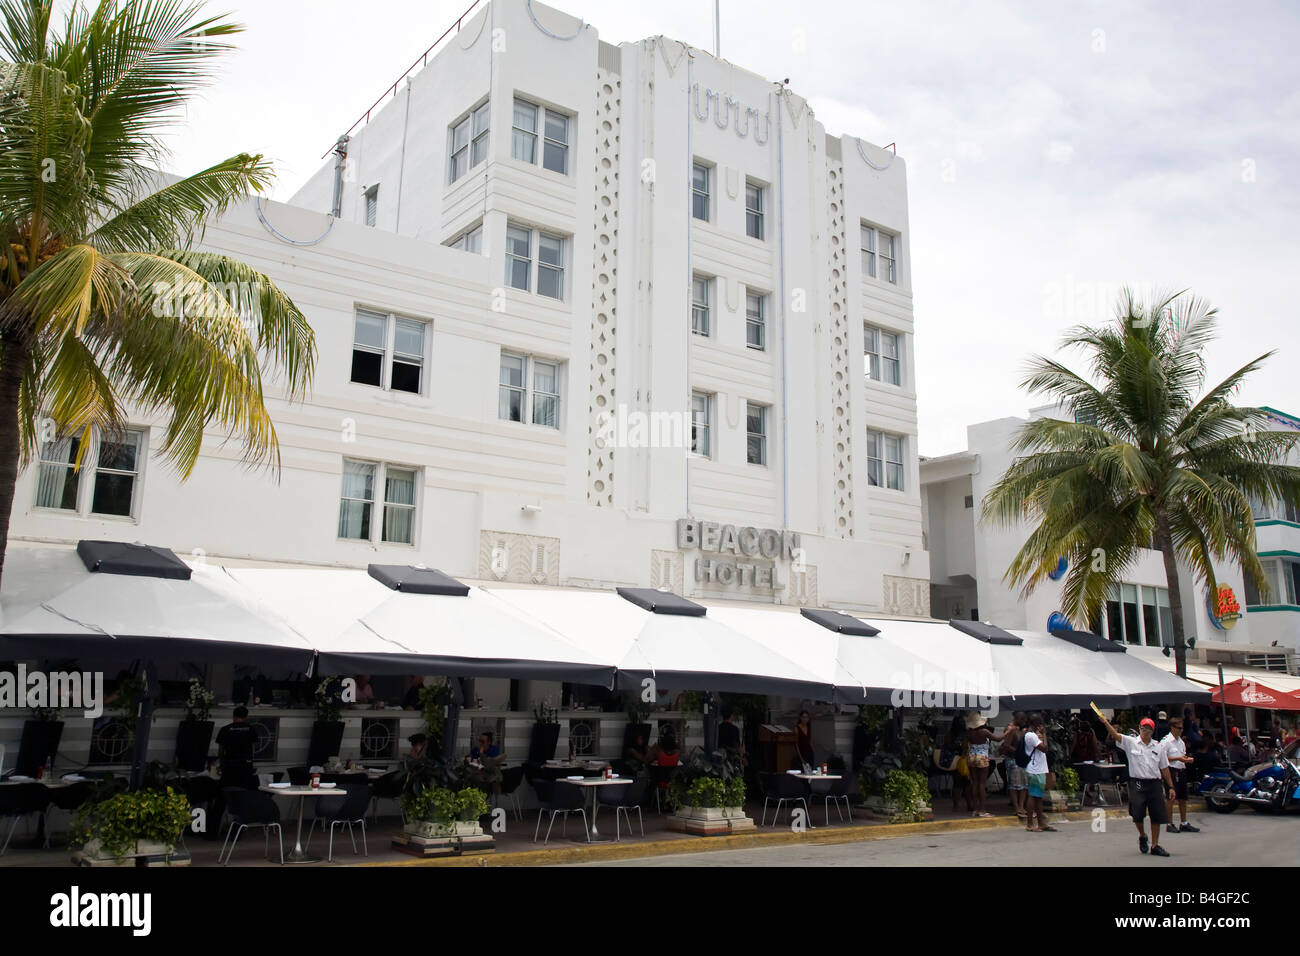 Beacon Hotel, South Beach, Miami, Florida Stock Photo